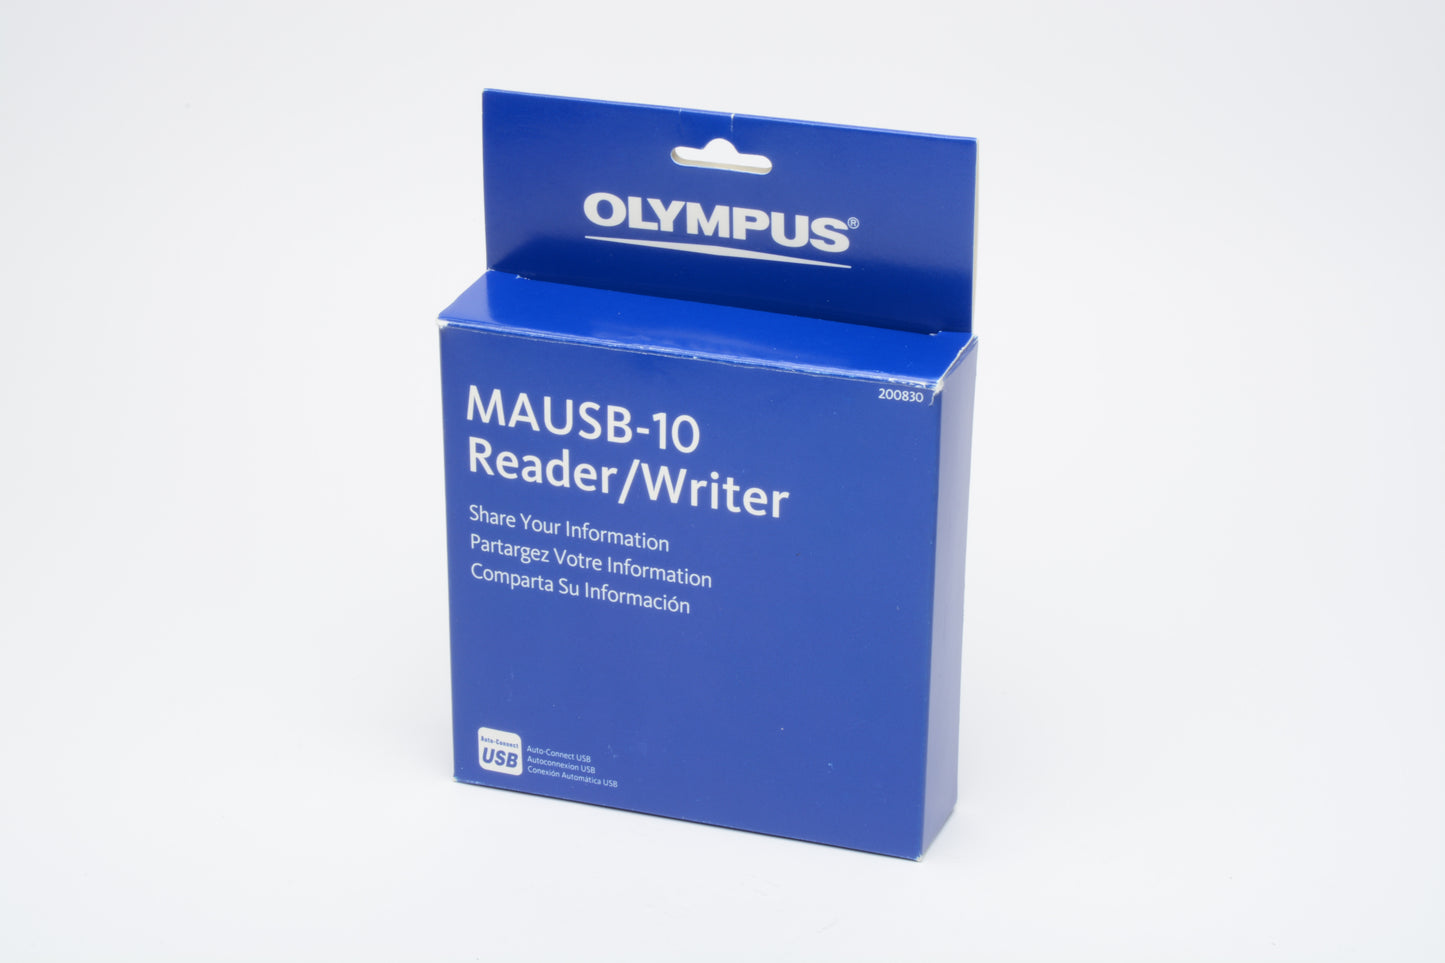 Olympus MAUSB-10 Reader/Writer #200830, Boxed